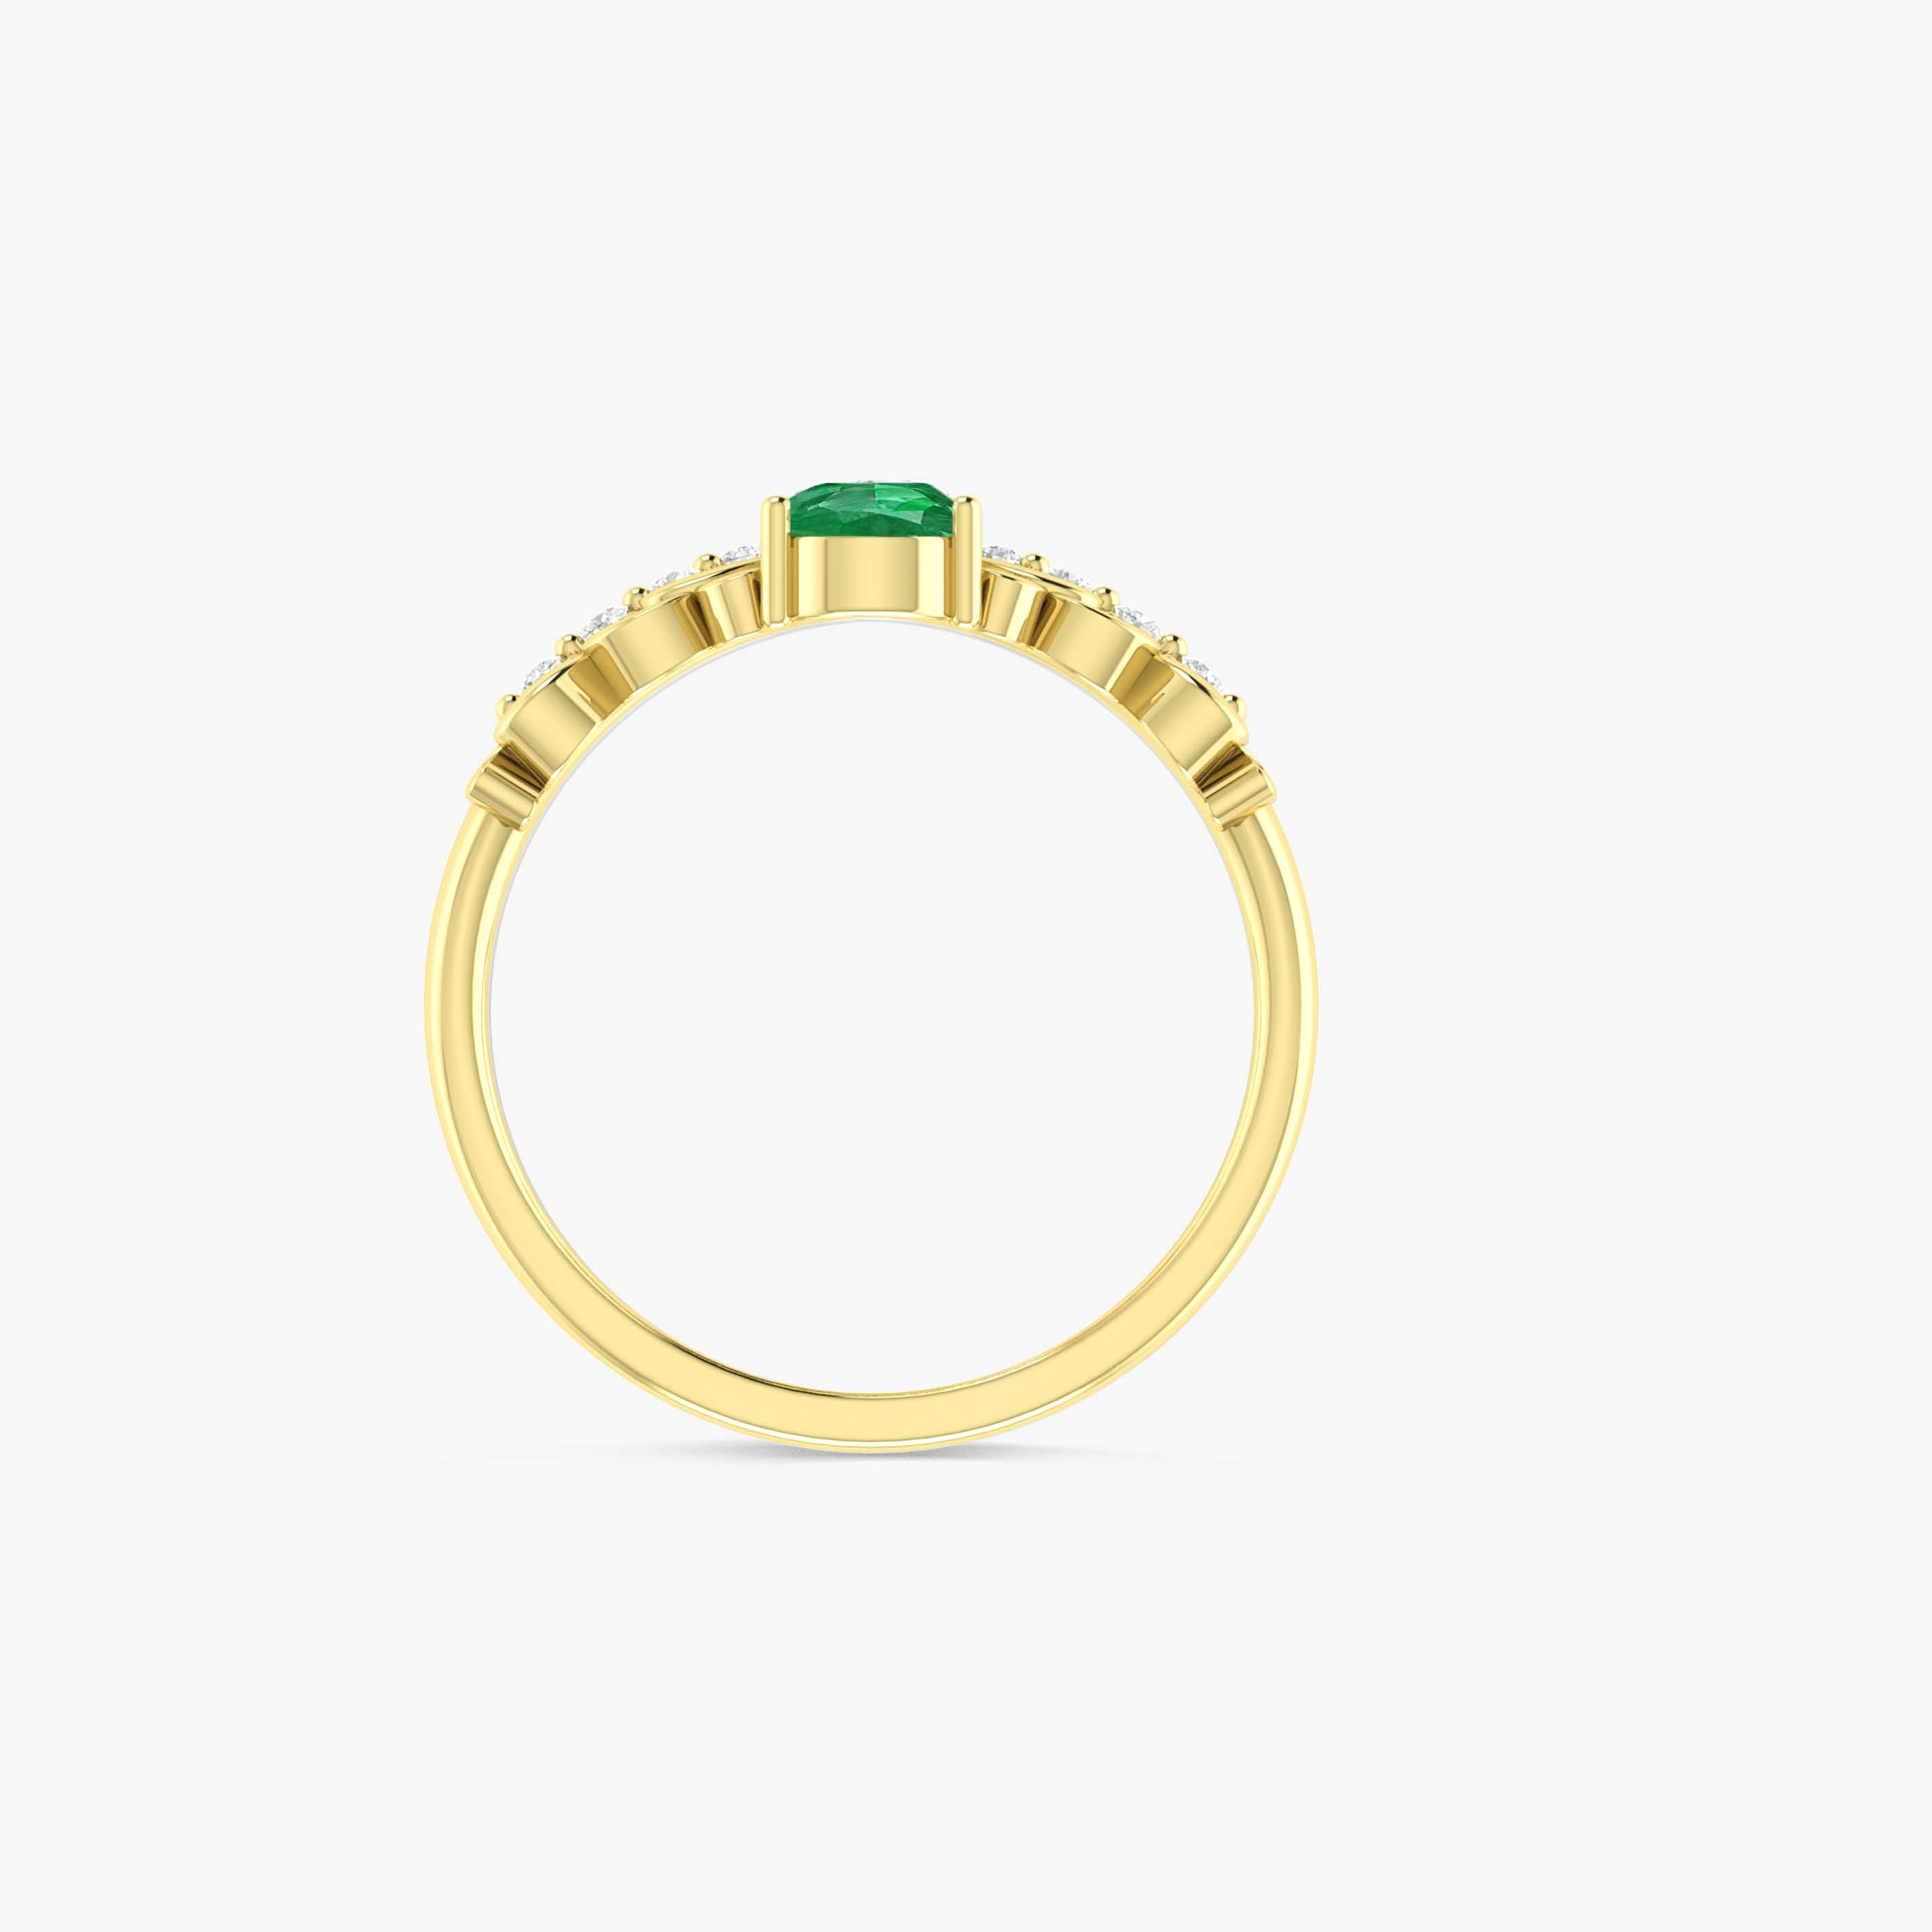 Green Emerald Gemstone Crown Style Ring